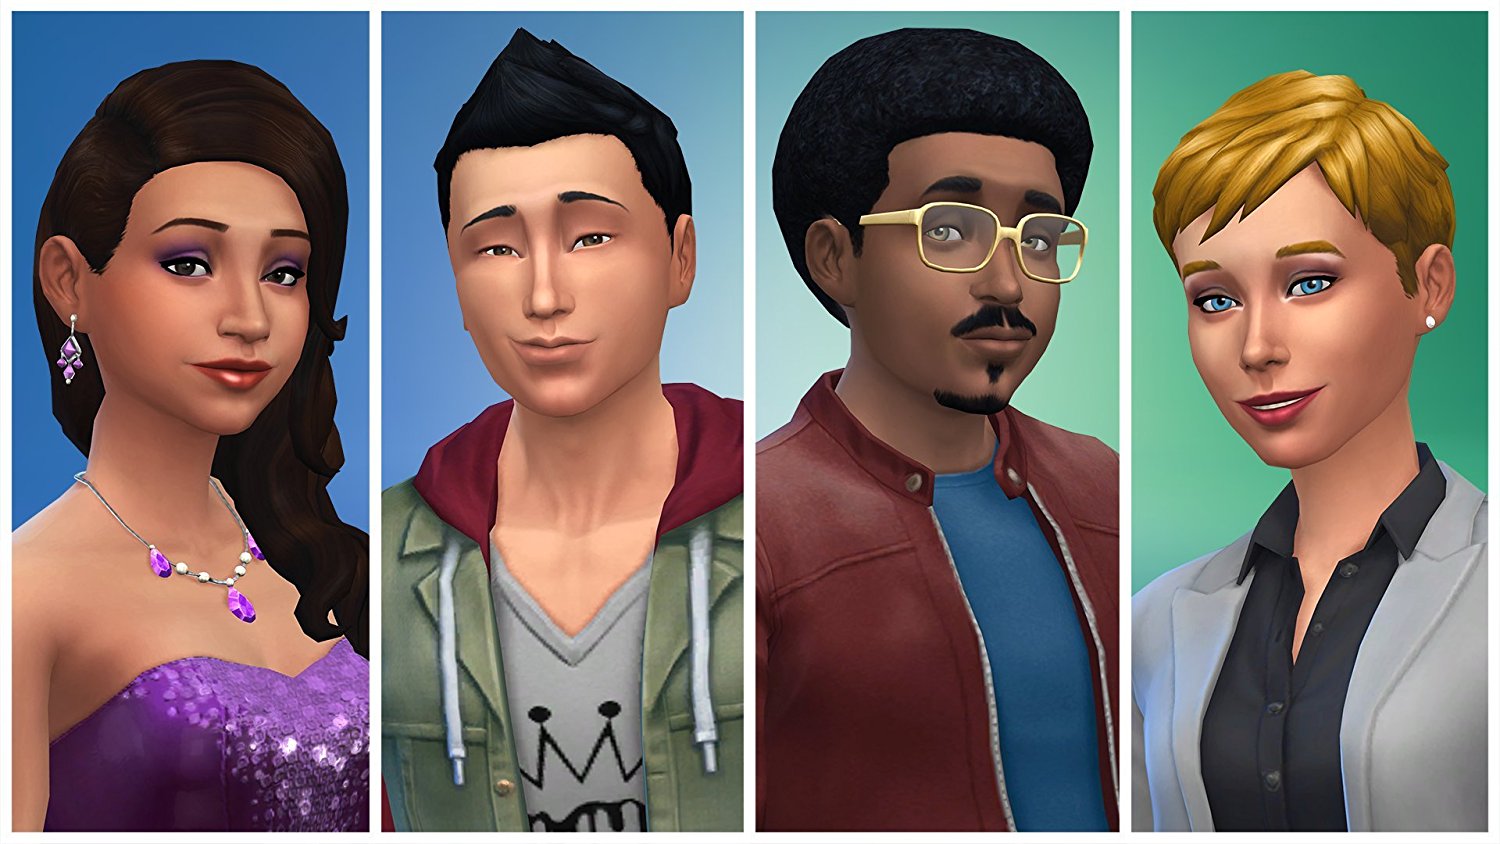 The Sims 4 screenshot 12086